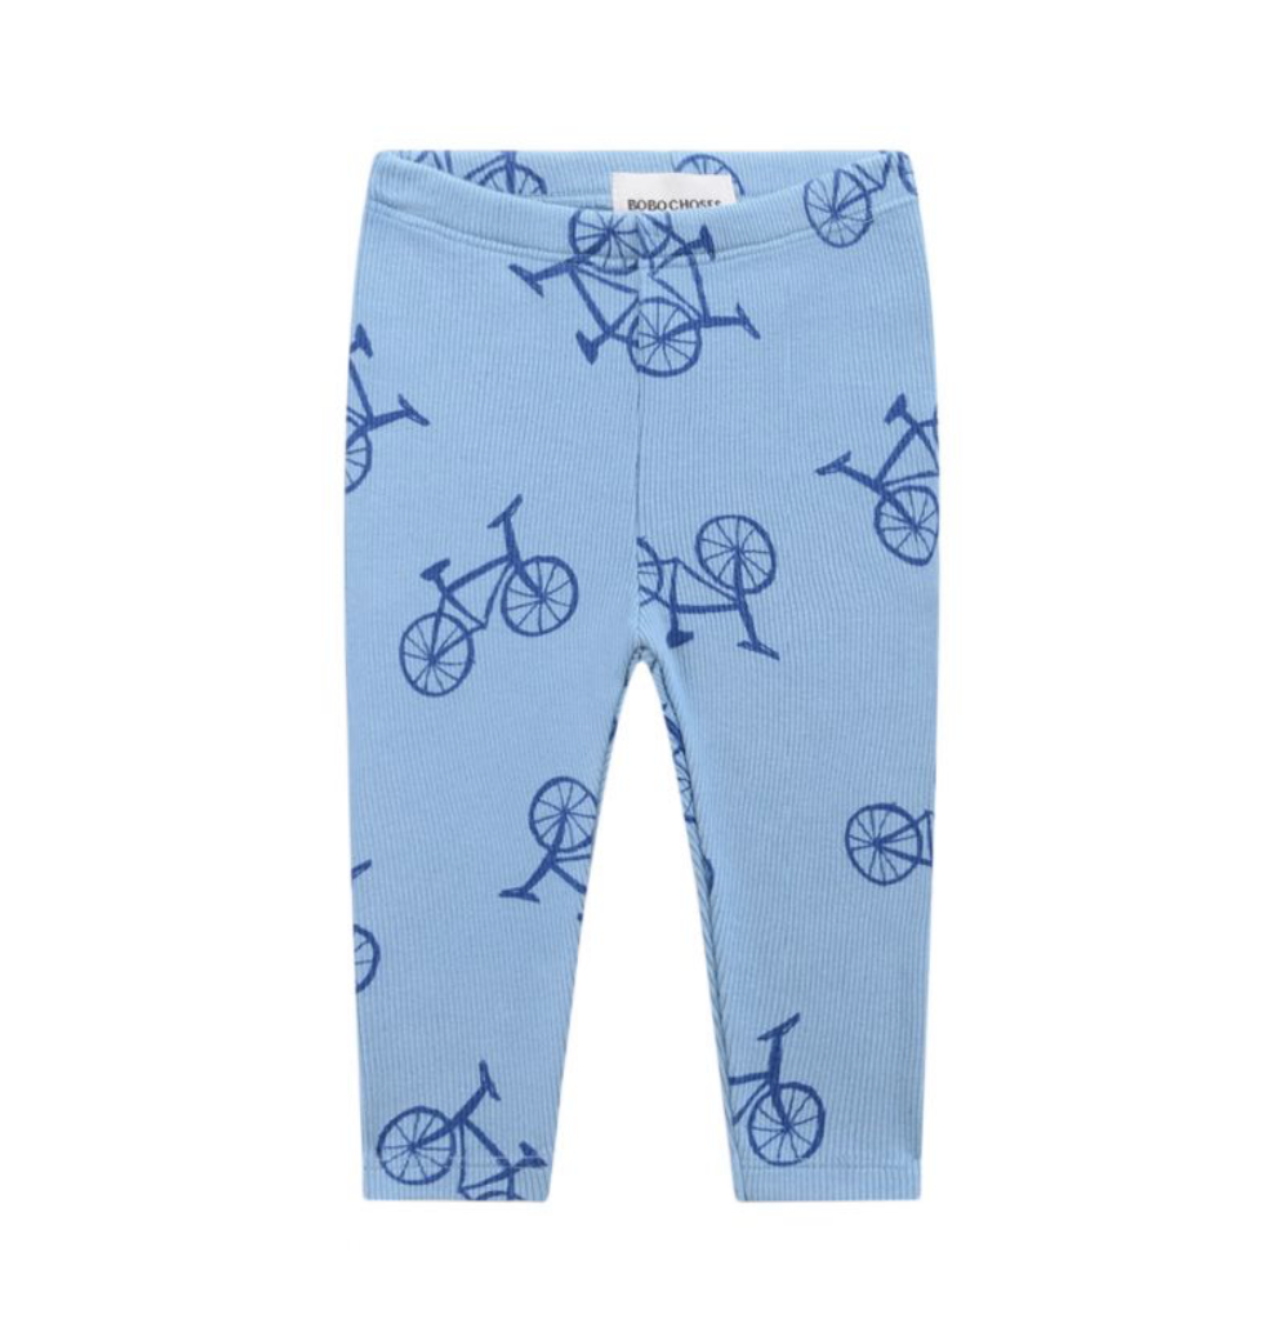 BOBO CHOSES - Legging bleu clair motif bicyclettes - 12/18 mois